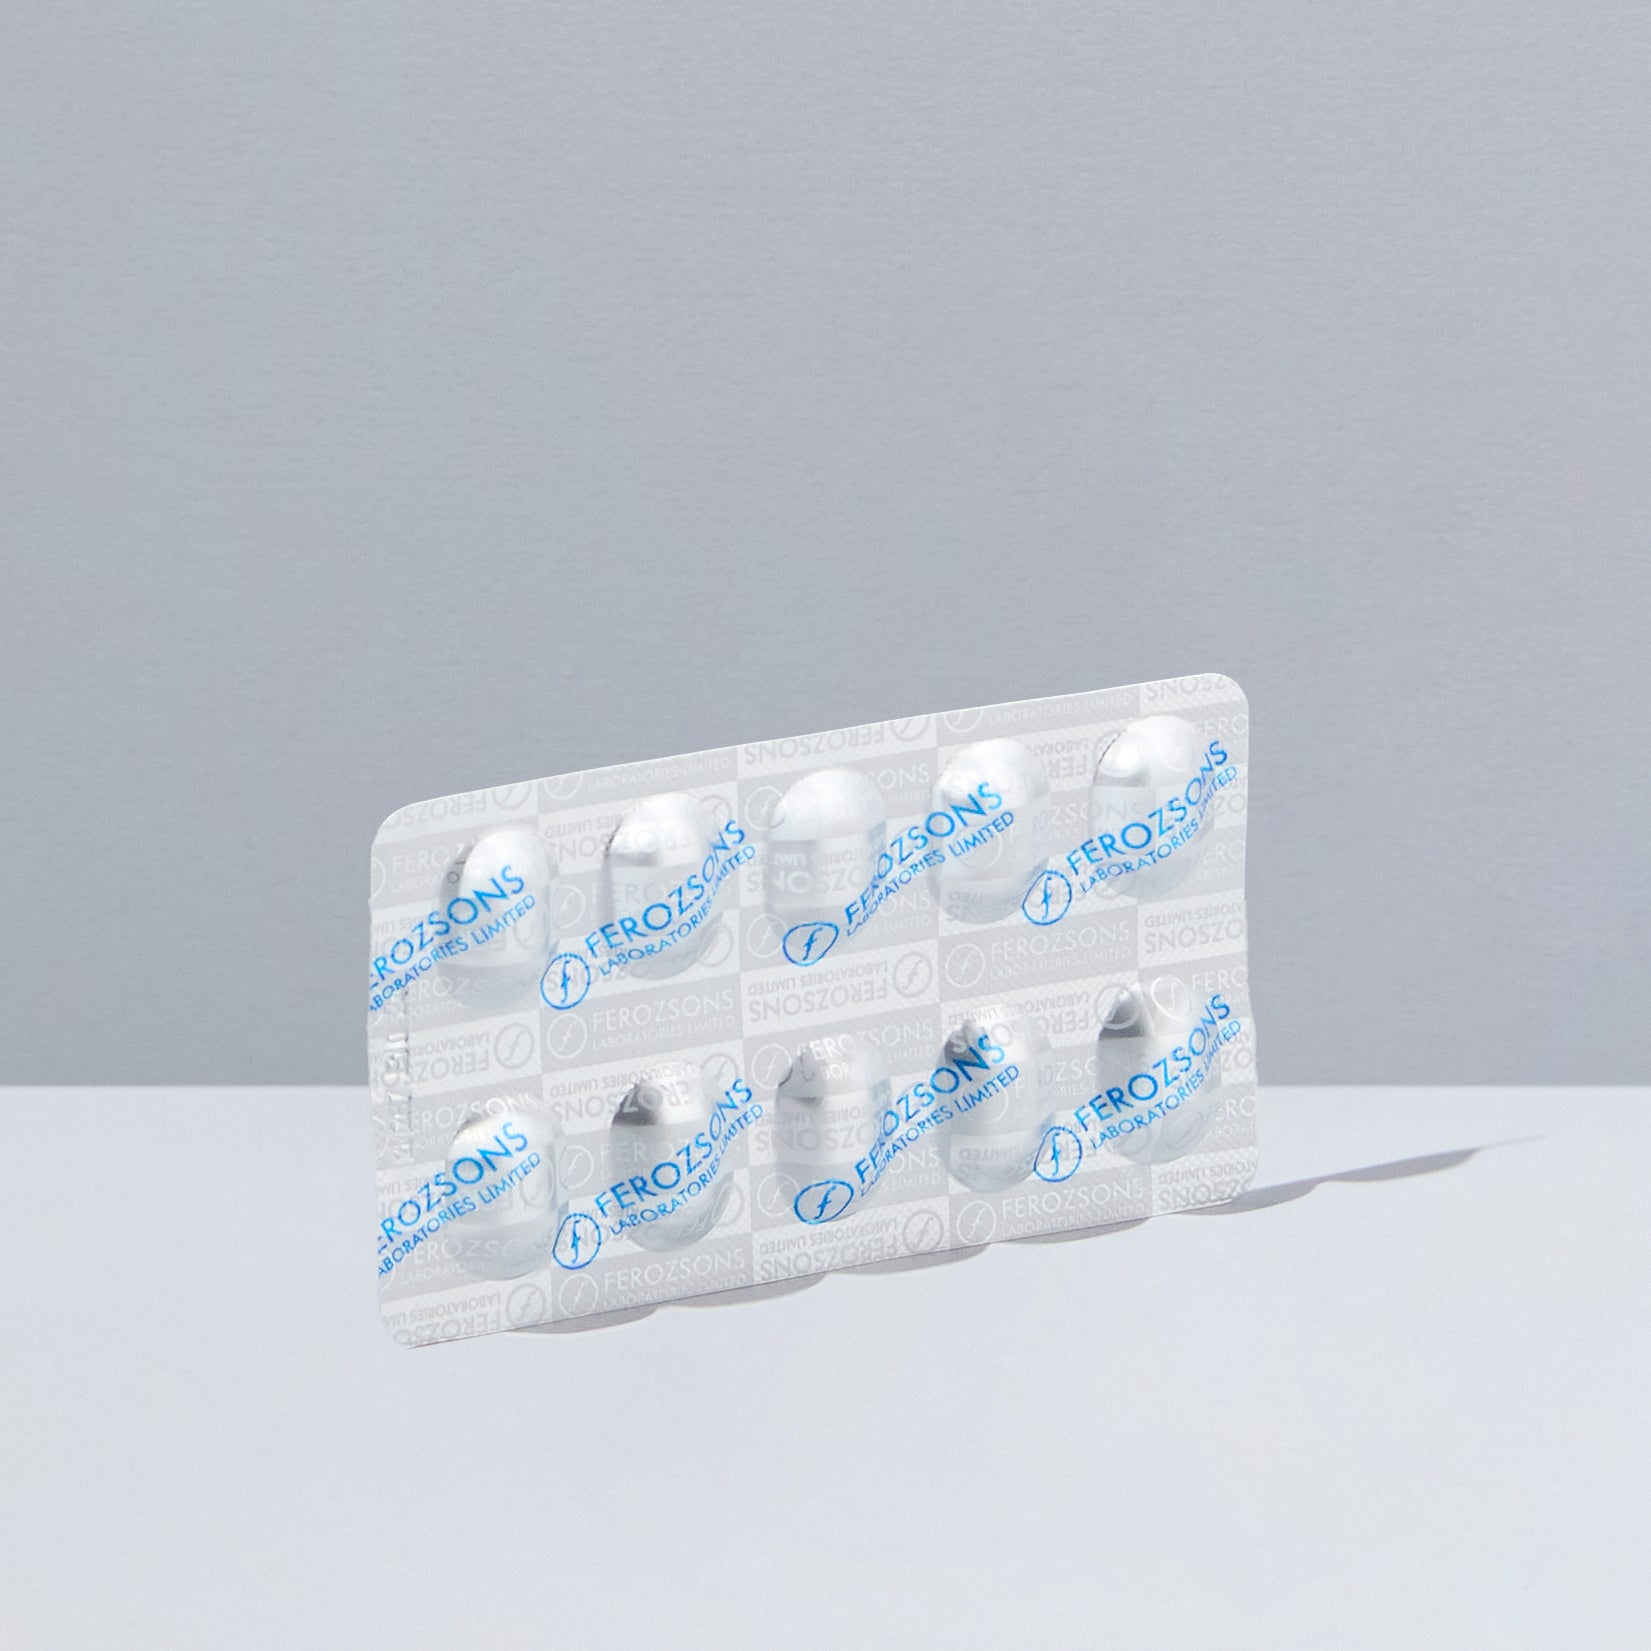 [Rx] AURORA Rosuvastatin Calcium Tablet 10mg (Per Tablet)* | DMD Patient-Exclusive